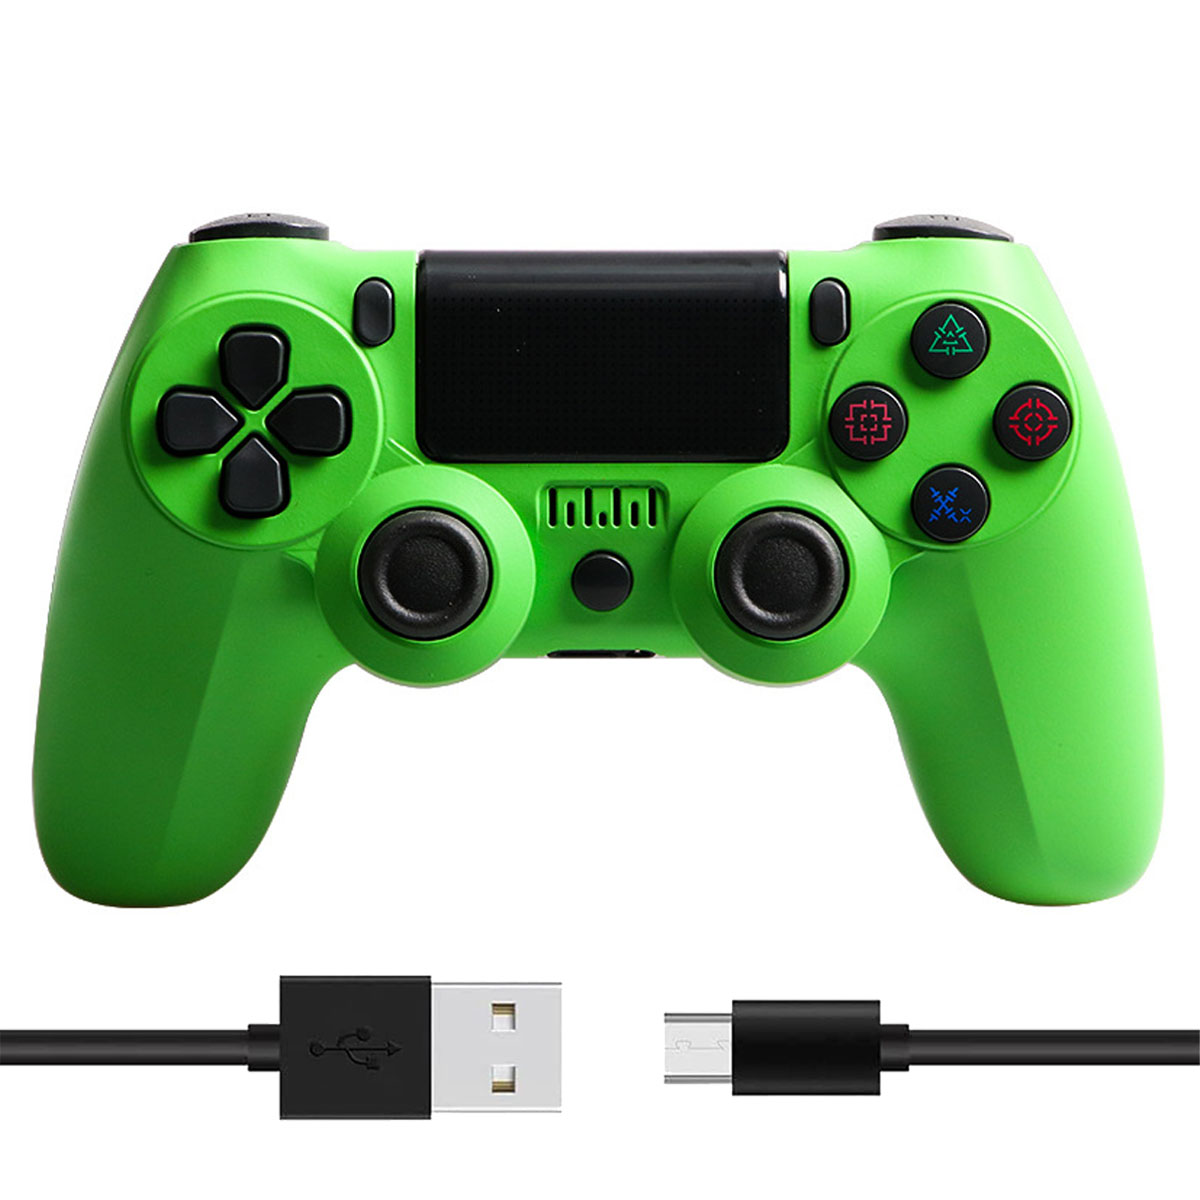 RESPIEL Gamepad, Bluetooth Controller, Wireless Gamepad, Apfelgrün, Apfel grün für Controller PC/PS3/PS4